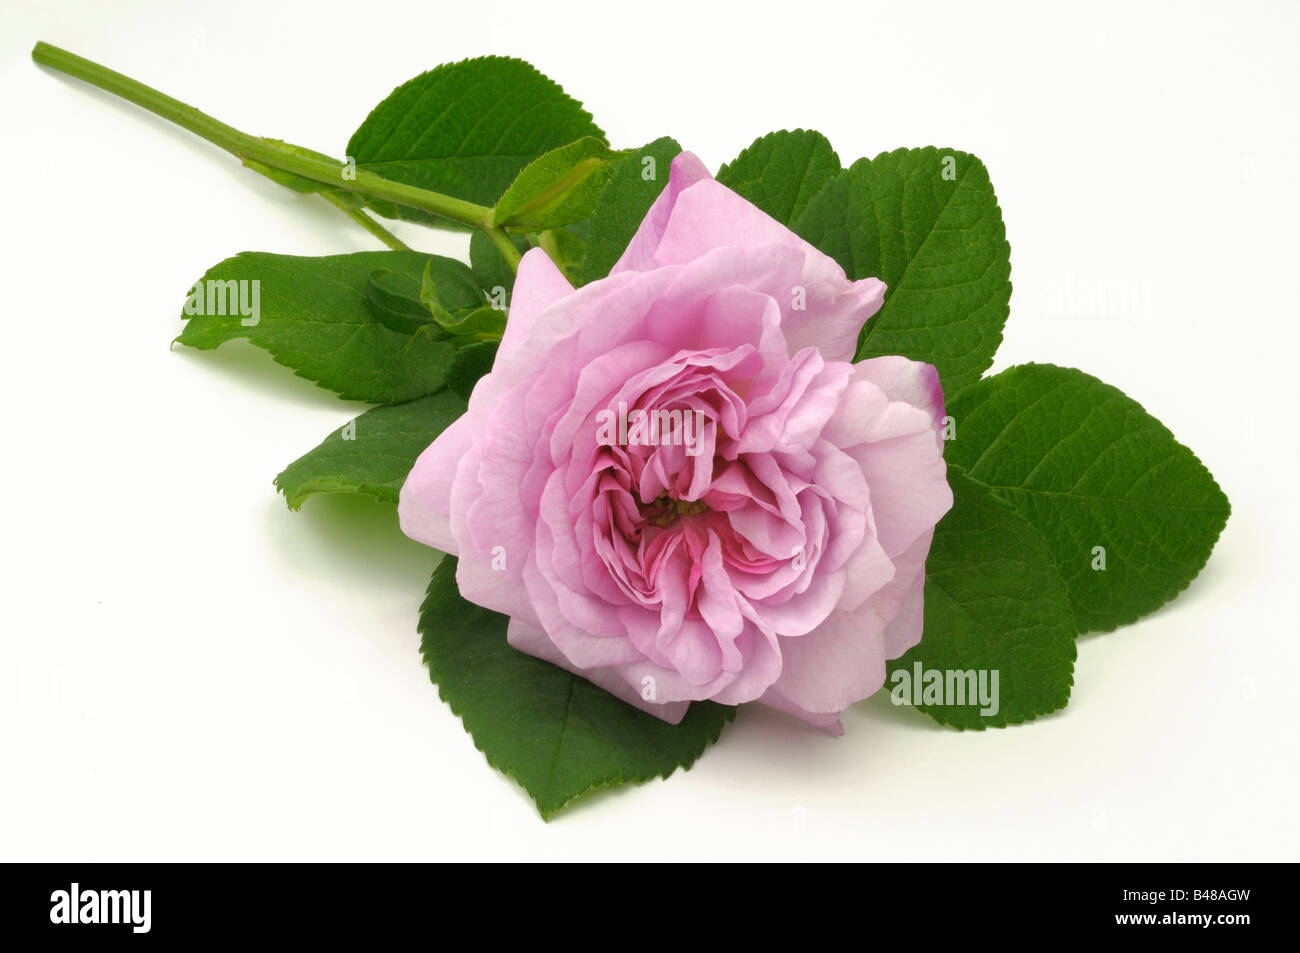 Cabbage Rose, Provence Rose (Rosa x centifolia), variety: Fantin Latour, flower, studio picture Stock Photo